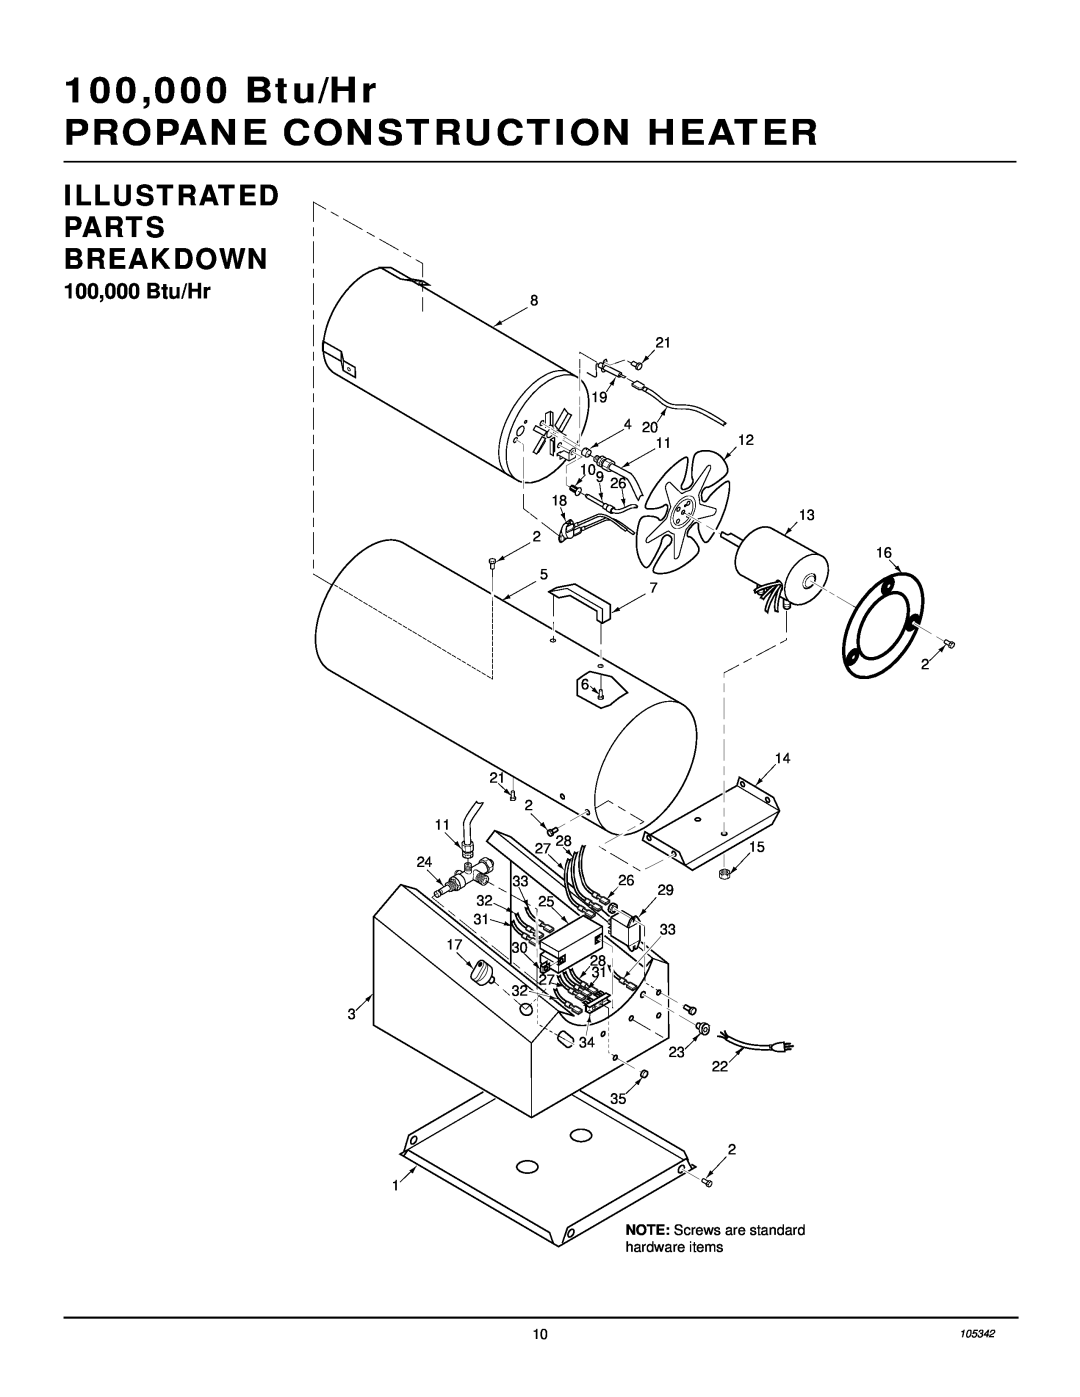 Desa RM100LP owner manual Illustrated Parts Breakdown, 100,000 Btu/Hr PROPANE CONSTRUCTION HEATER 